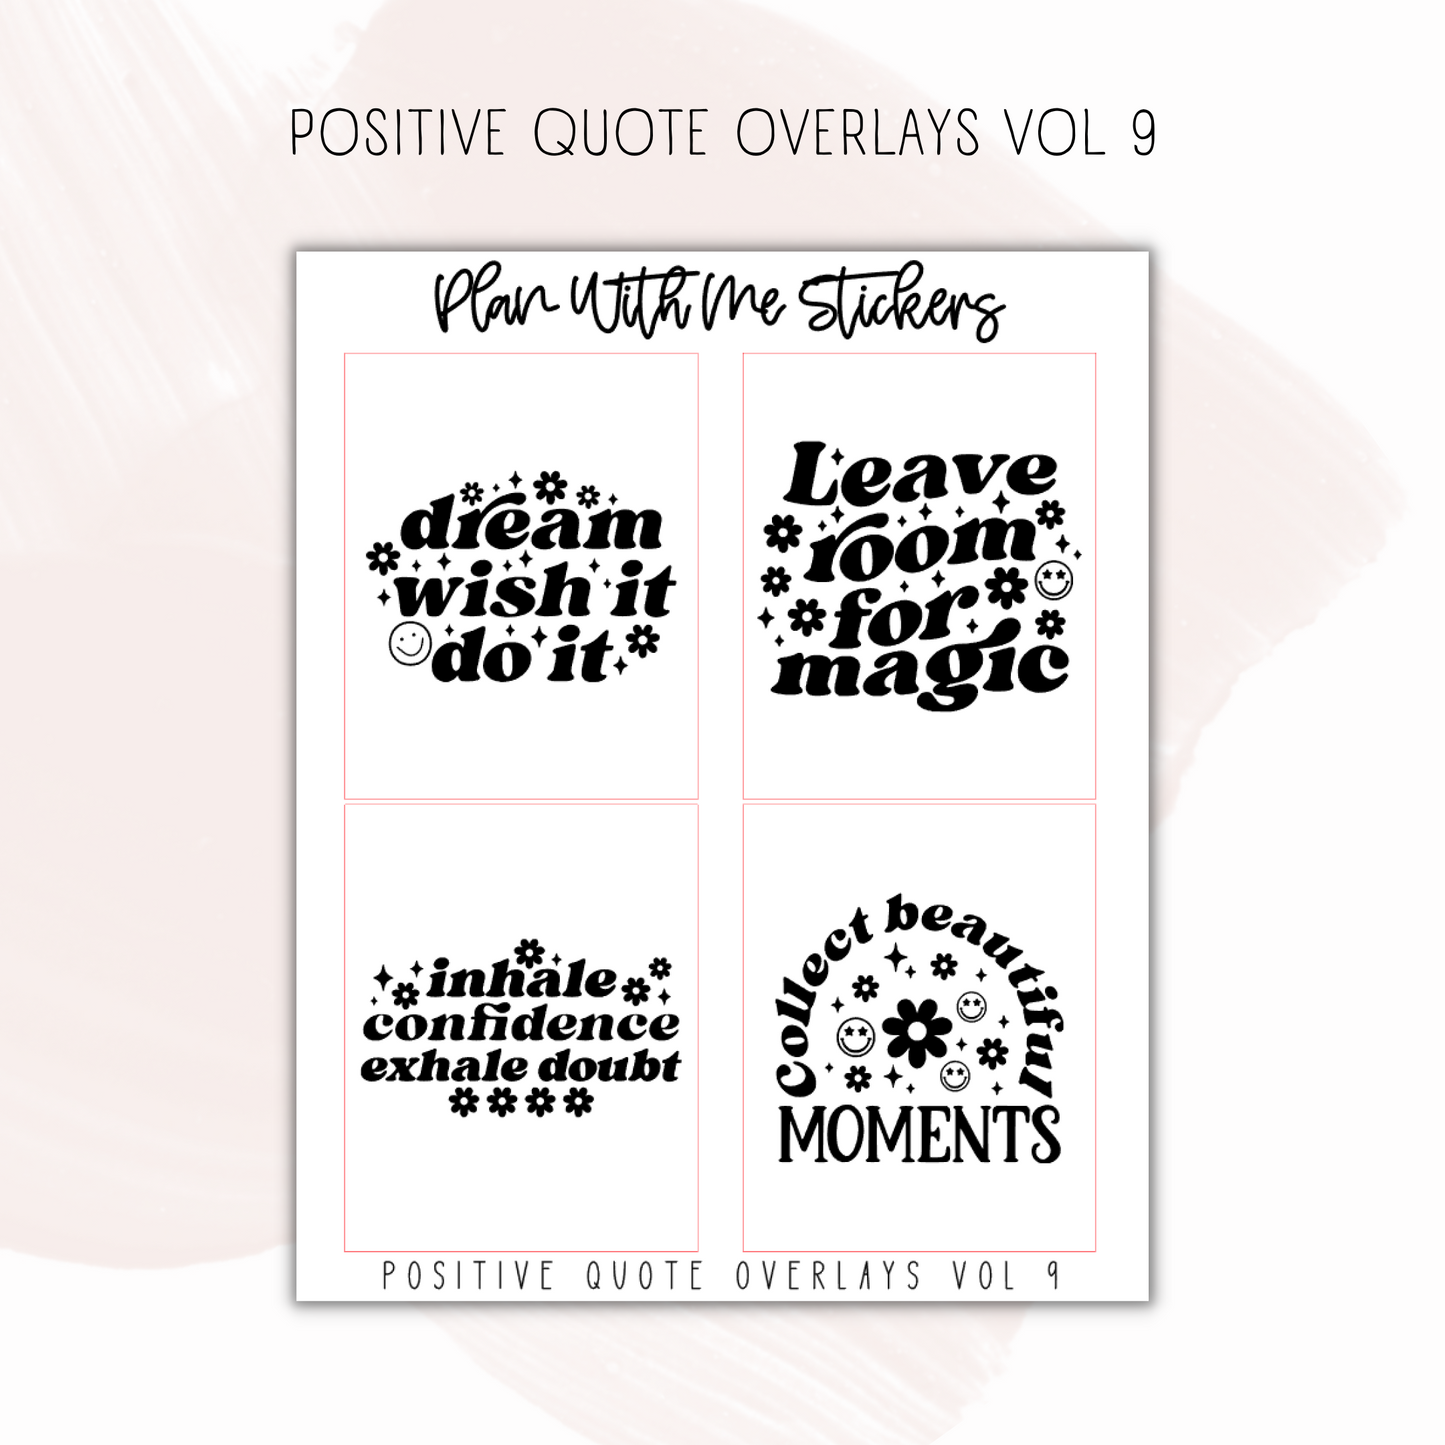 Positive Overlays Vol 9